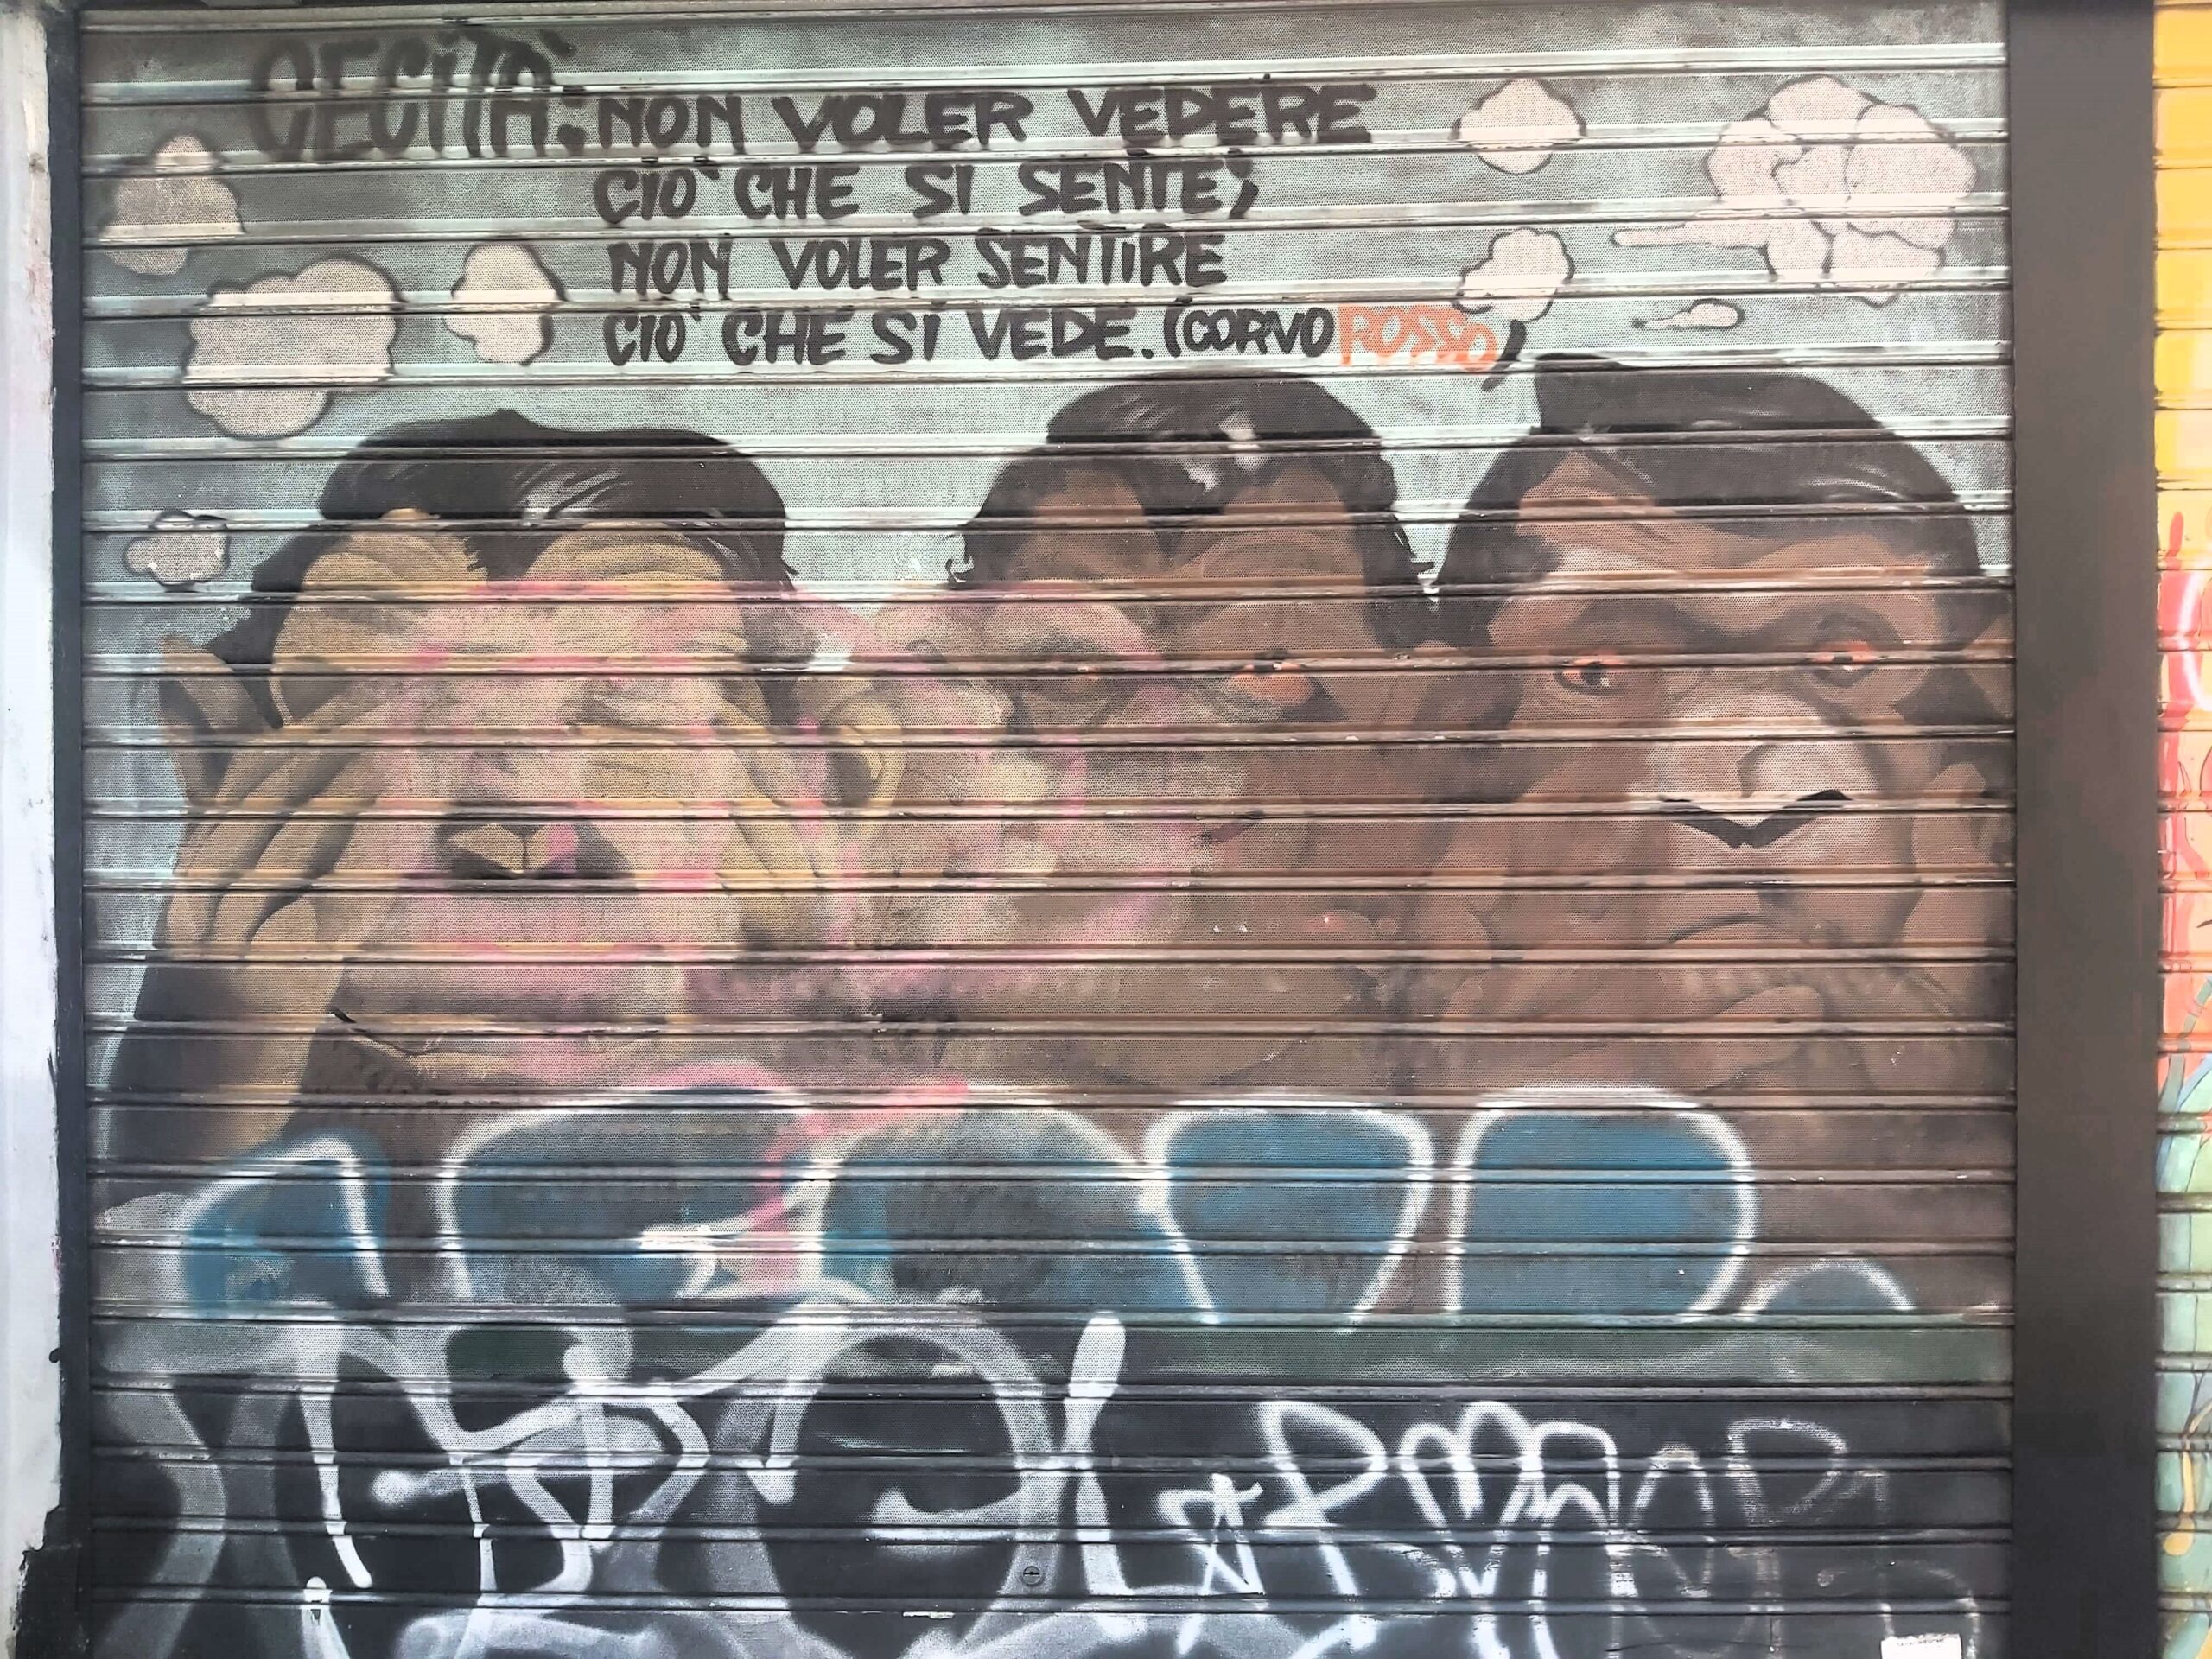 A graffiti image of three monkeys in Milan, Italy